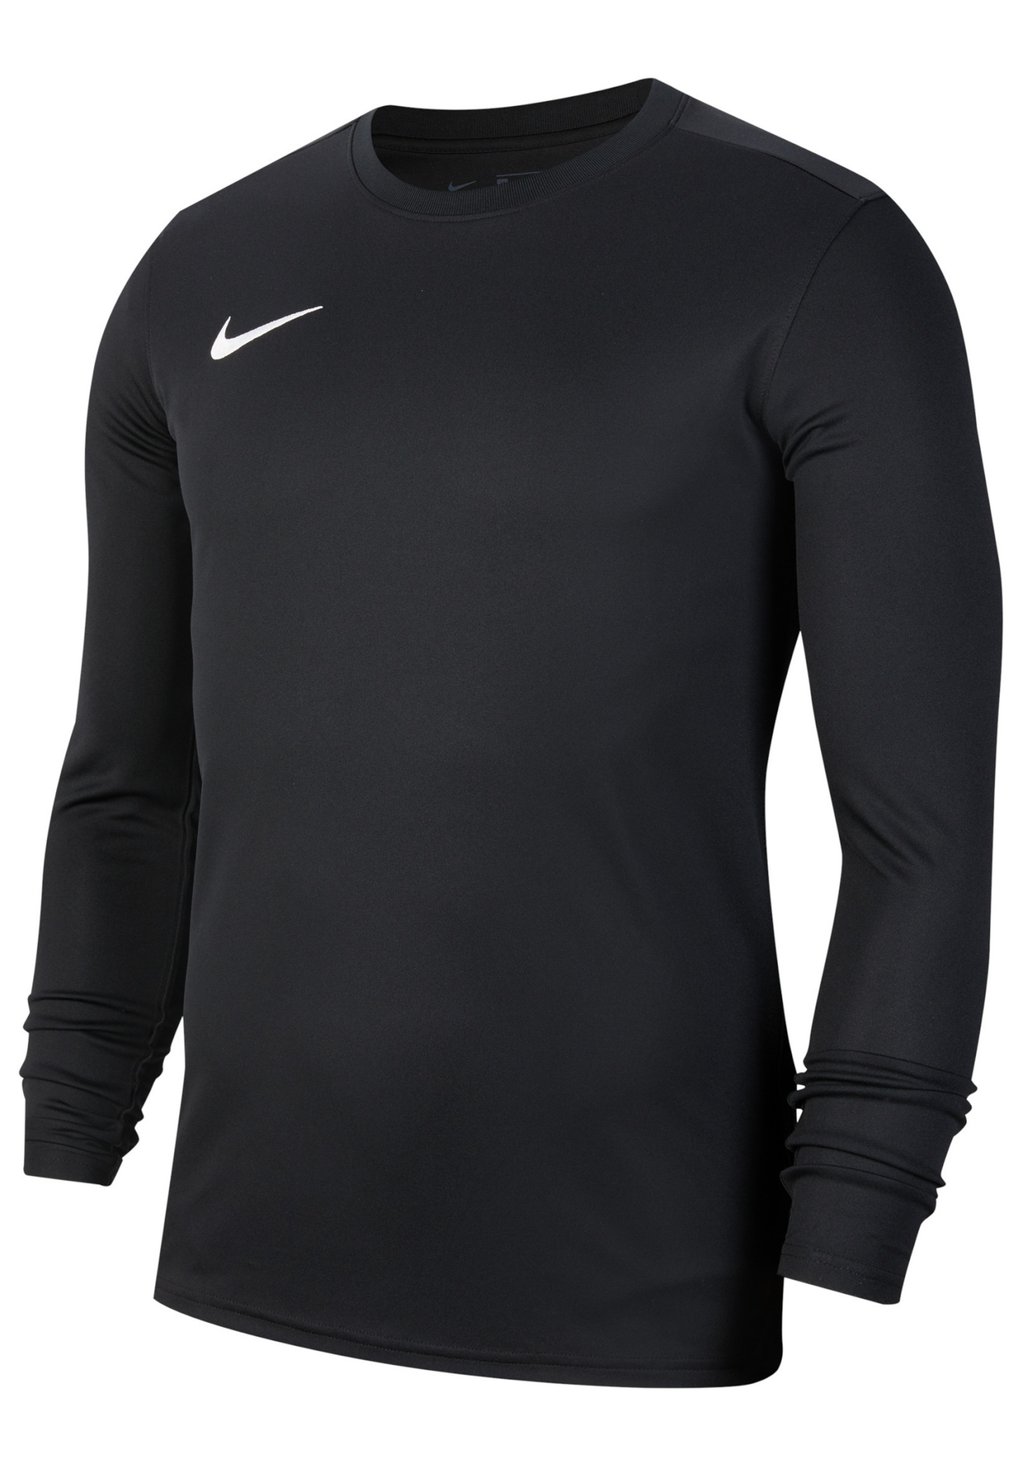 Рубашка с длинным рукавом PARK Nike, цвет schwarzweiss футболка базовая teamsport nike цвет schwarzweiss